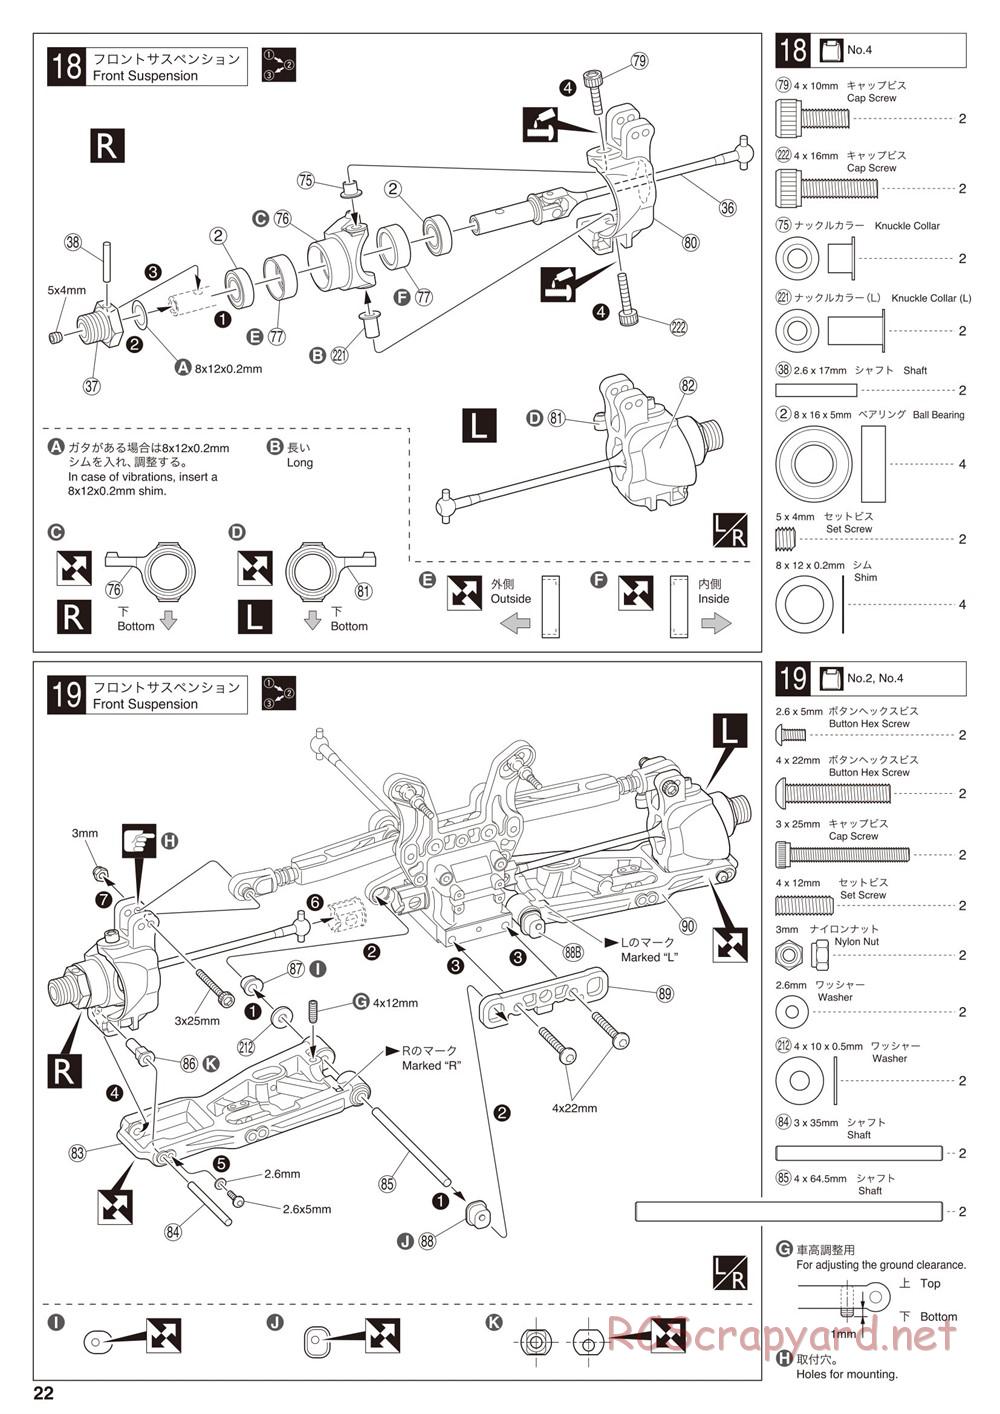 Kyosho - Inferno MP9e TKI - Manual - Page 22